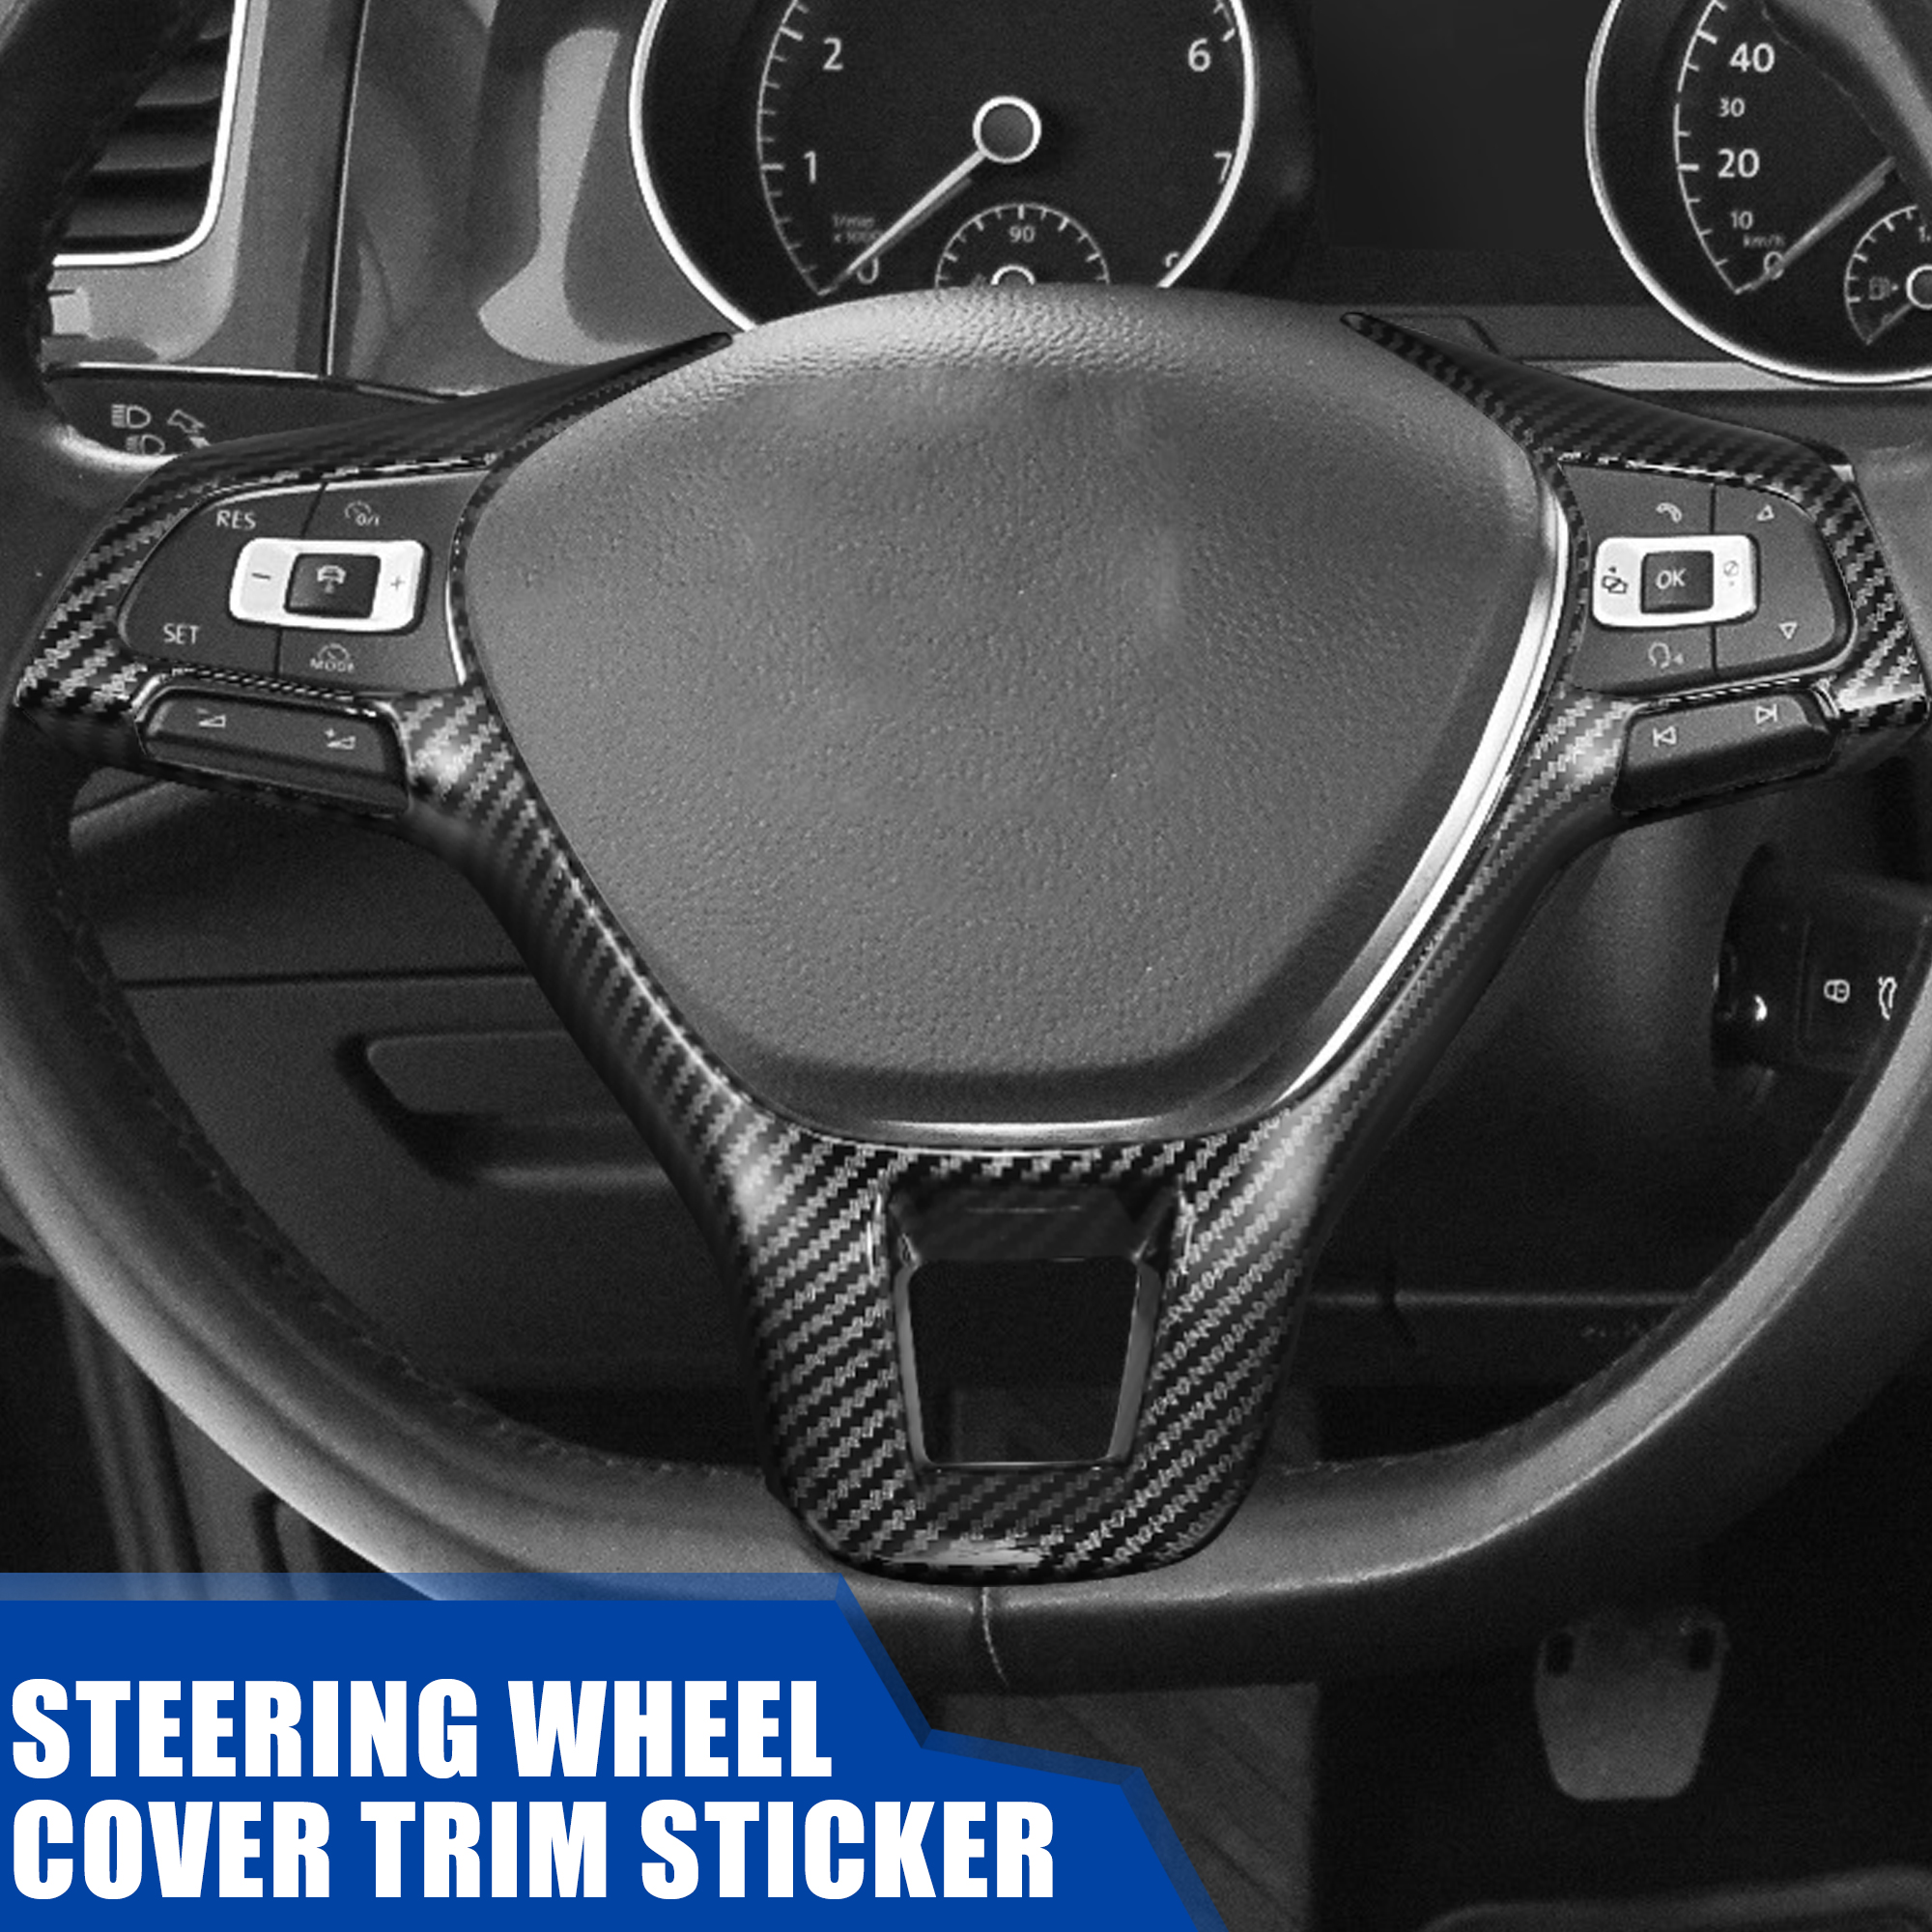 Unique Bargains Steering Wheel Cover Trim for Volkswagen Jetta 2016-2019 Carbon Fiber Pattern